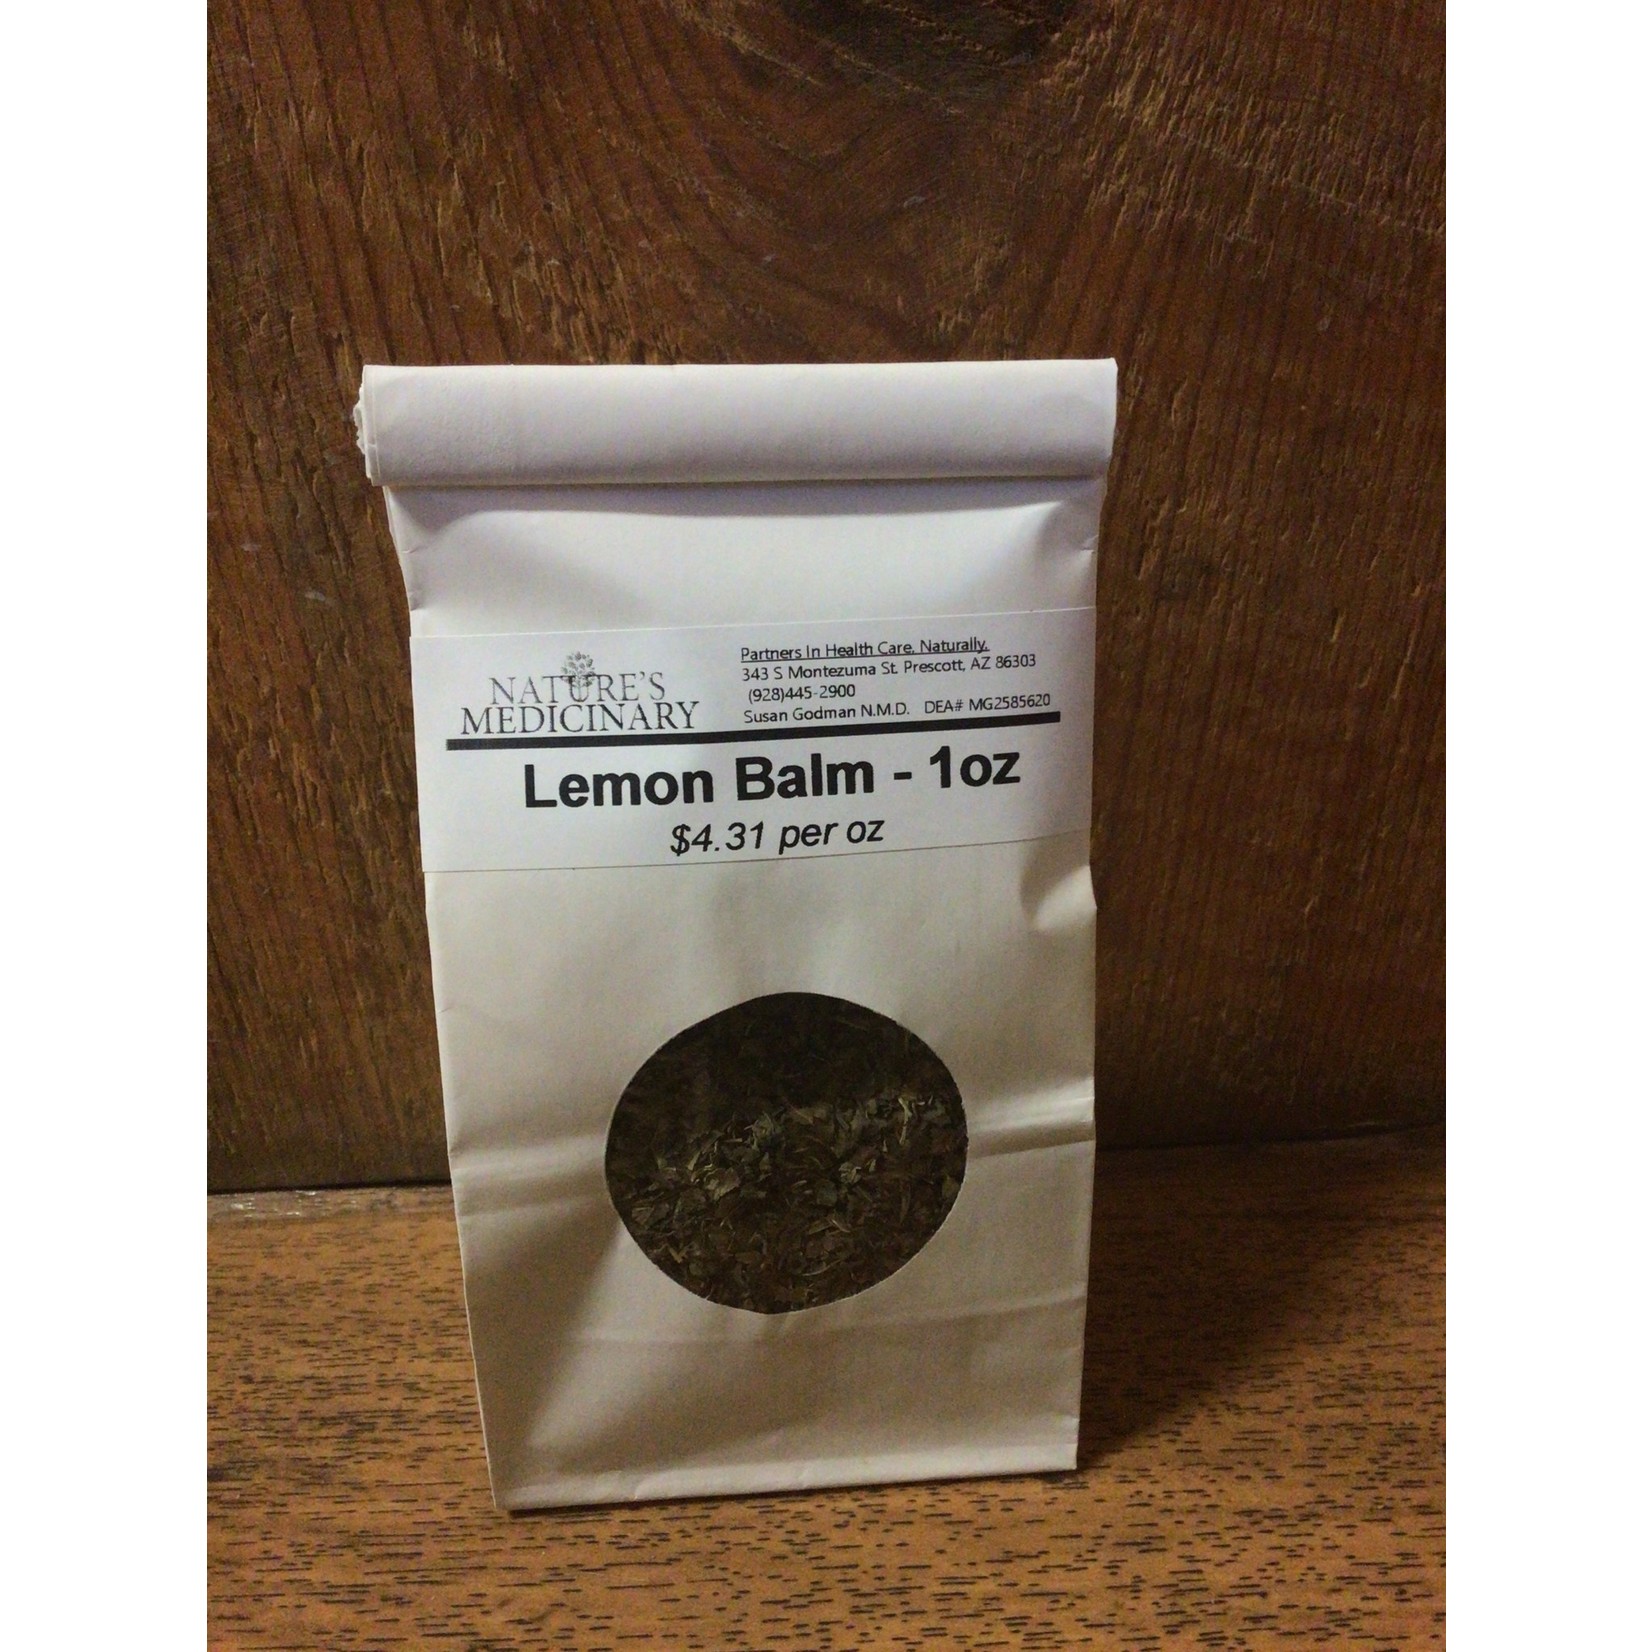 Lemon Balm Leaf - 1oz (Mountain Rose Herbs) - Natures Medicinary